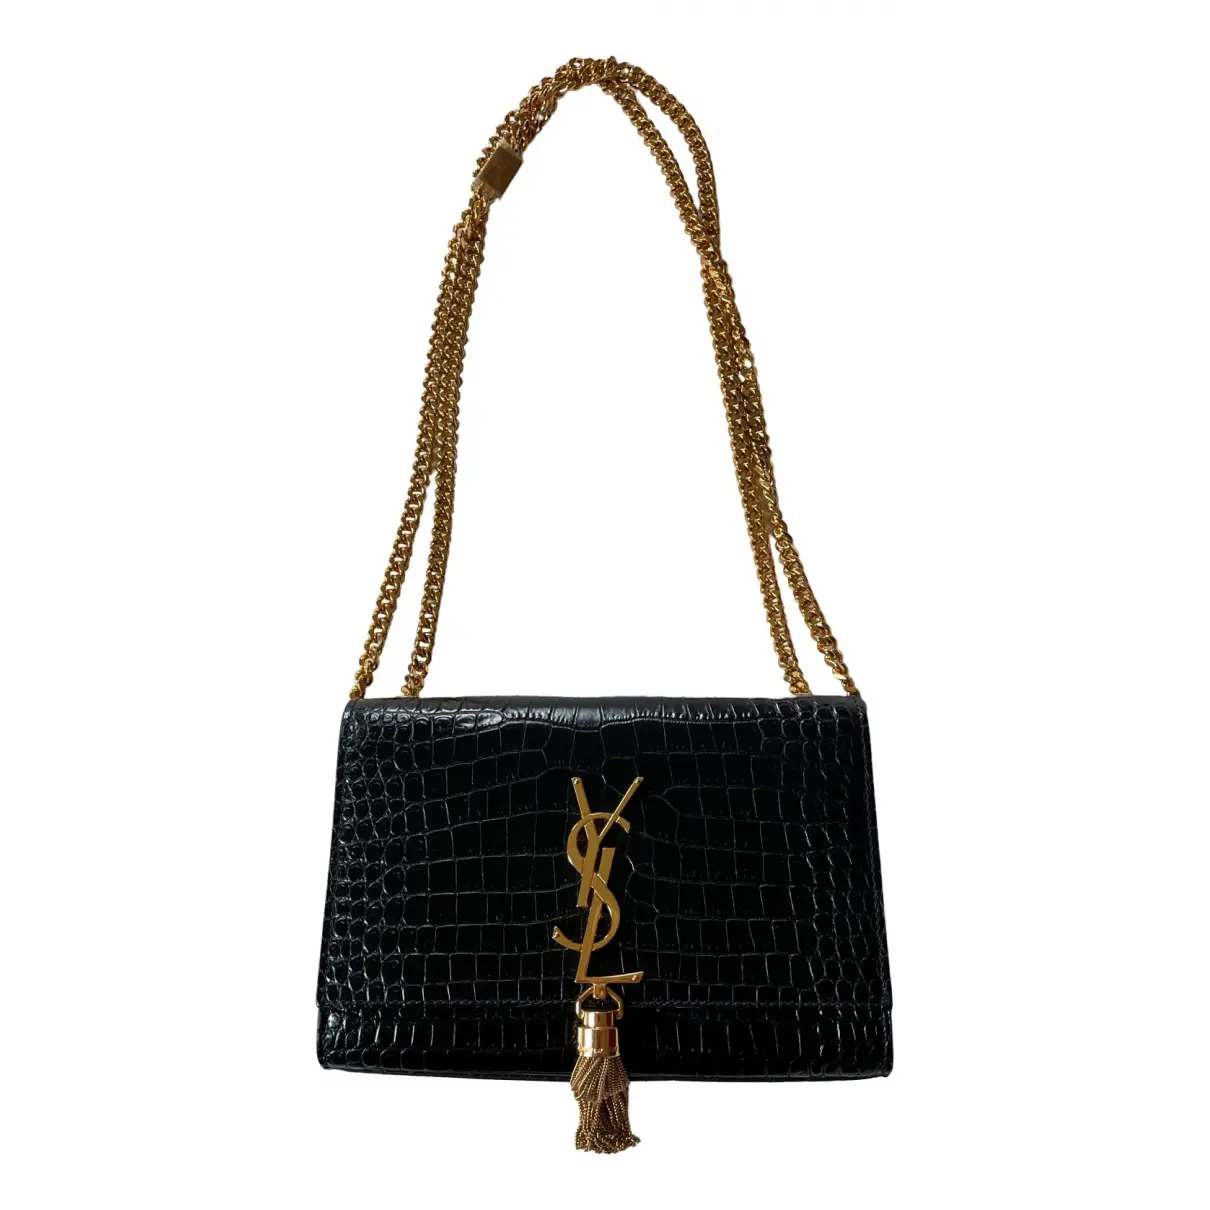 Pompom Kate patent leather handbag Saint Laurent